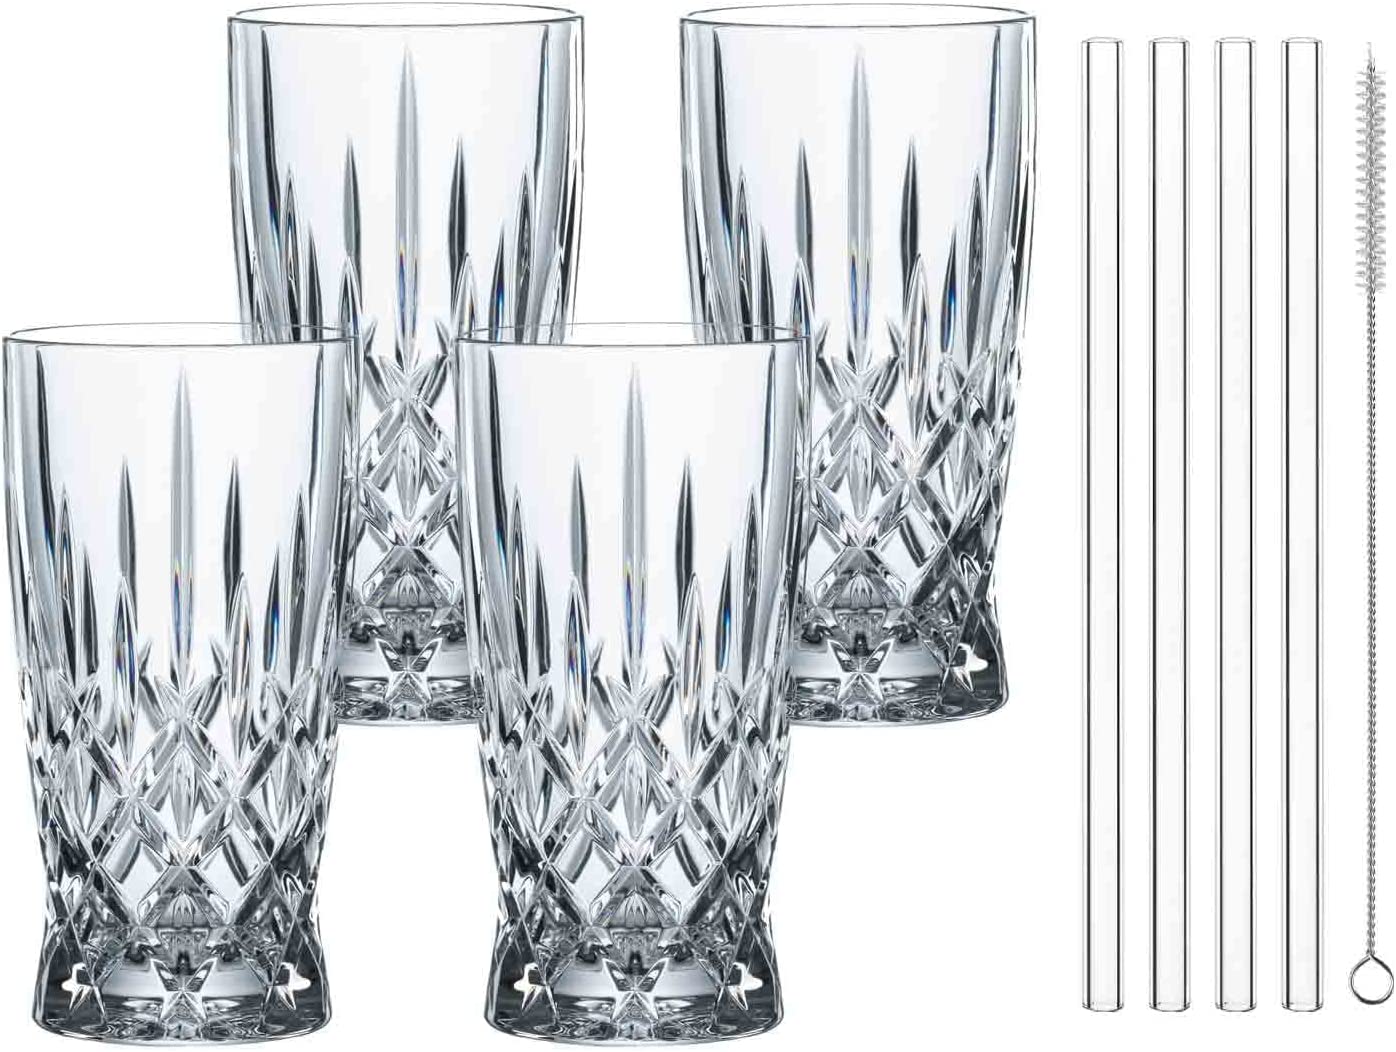 Spiegelau & Nachtmann Noblesse Latte Macchiato Set, Dishwasher Safe Hot Drink Glasses, Glass Straws 21 cm, 8-Piece Value Set, Crystal Glass